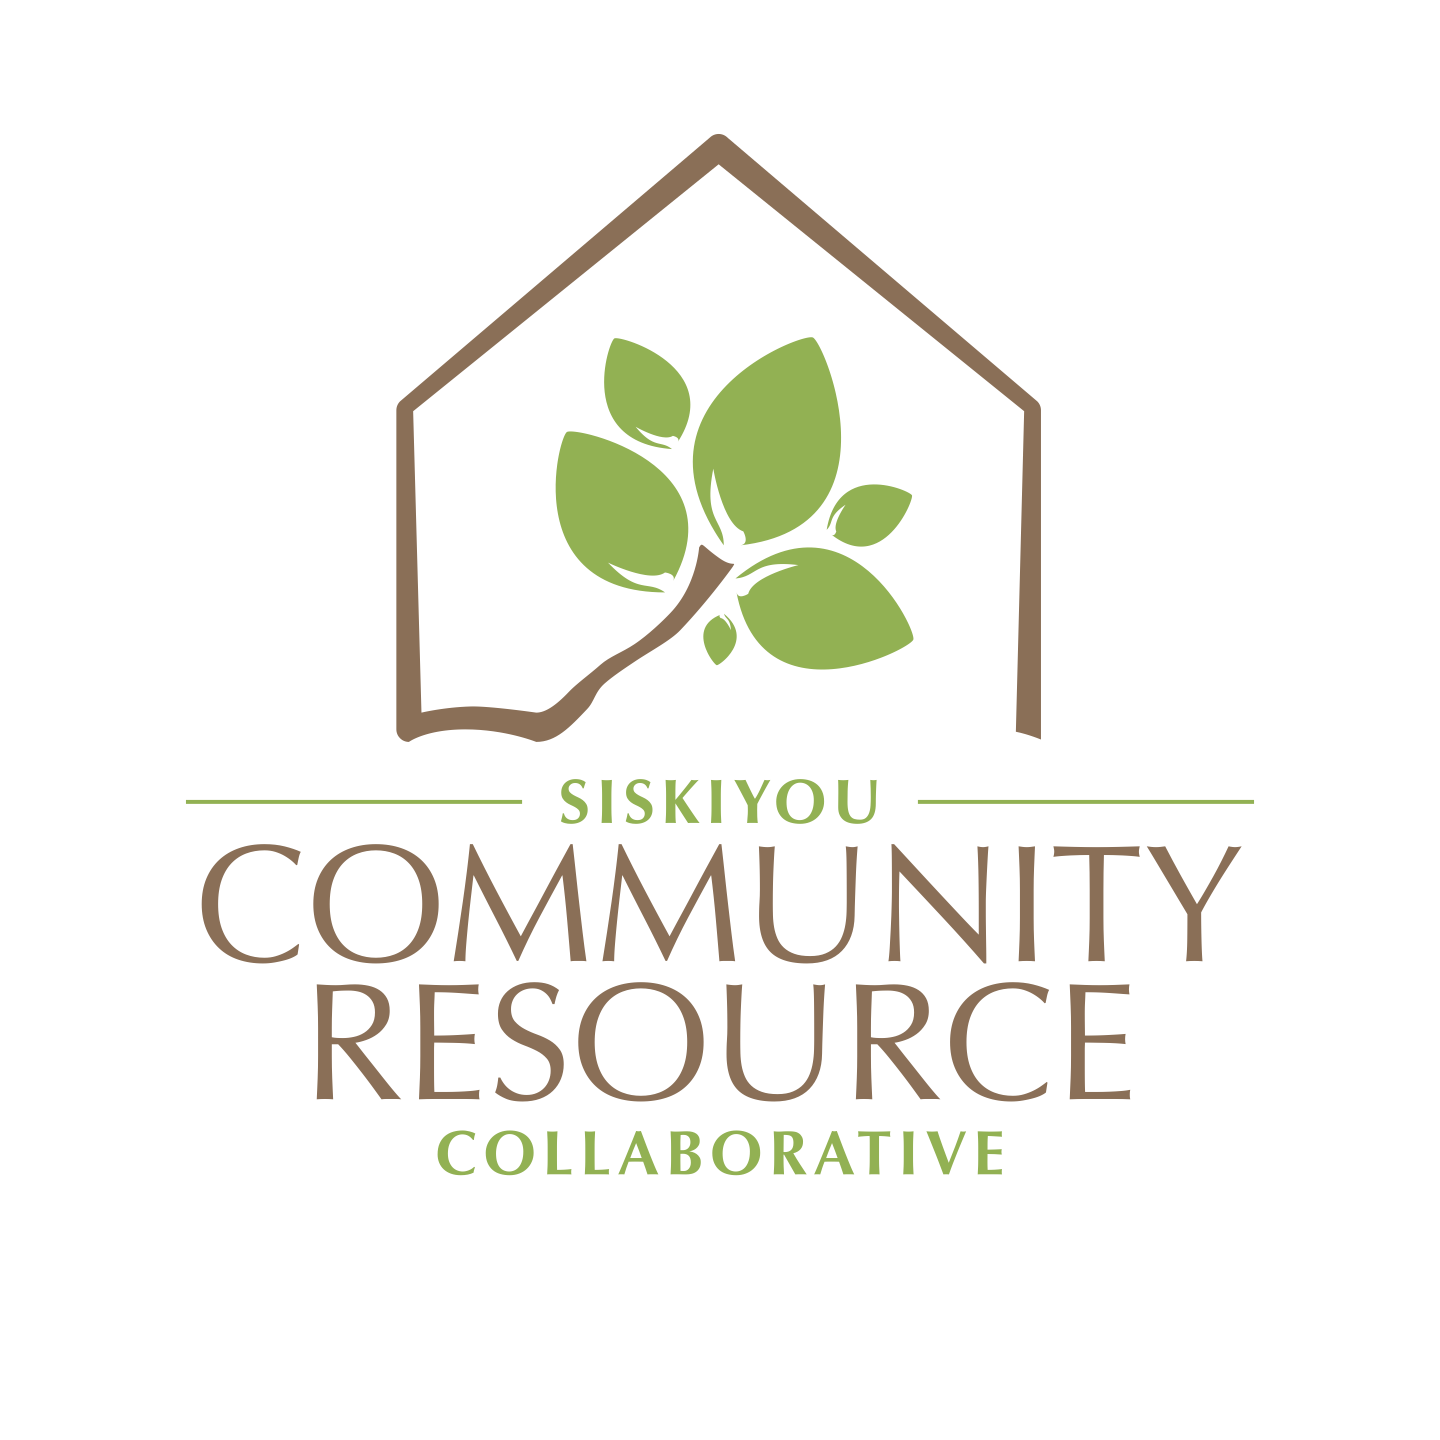 Siskiyou Community Resource Collaborative